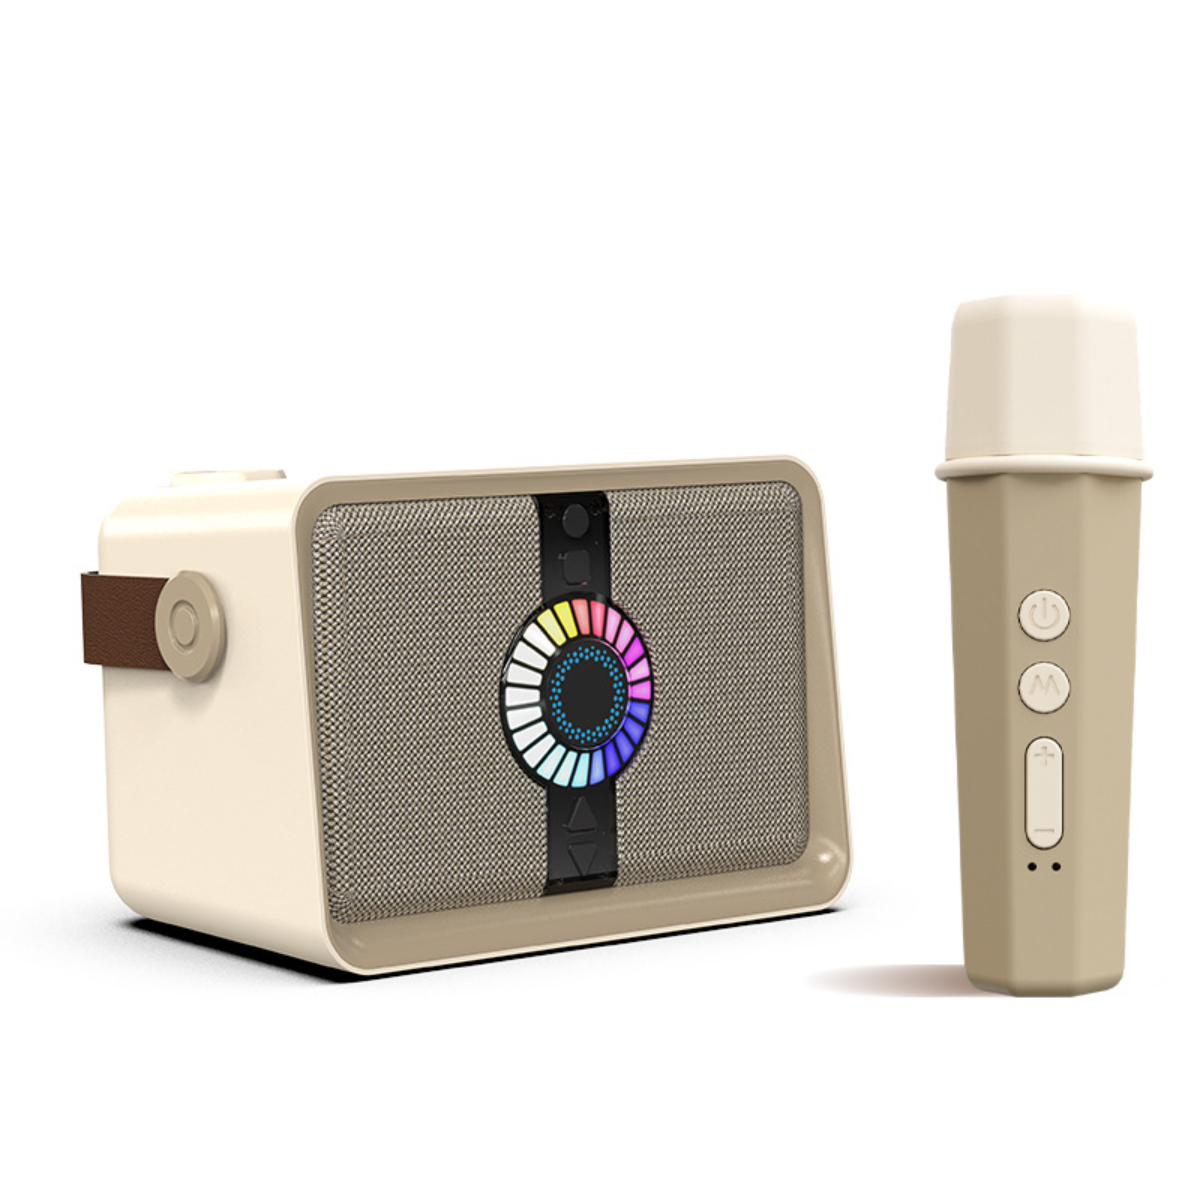 ENBAOXIN Drahtloser Lautsprecher Grün Bluetooth-Lautsprecher Grün Sound Bluetooth-Lautsprecher, Drahtloses Mikrofon Praxis